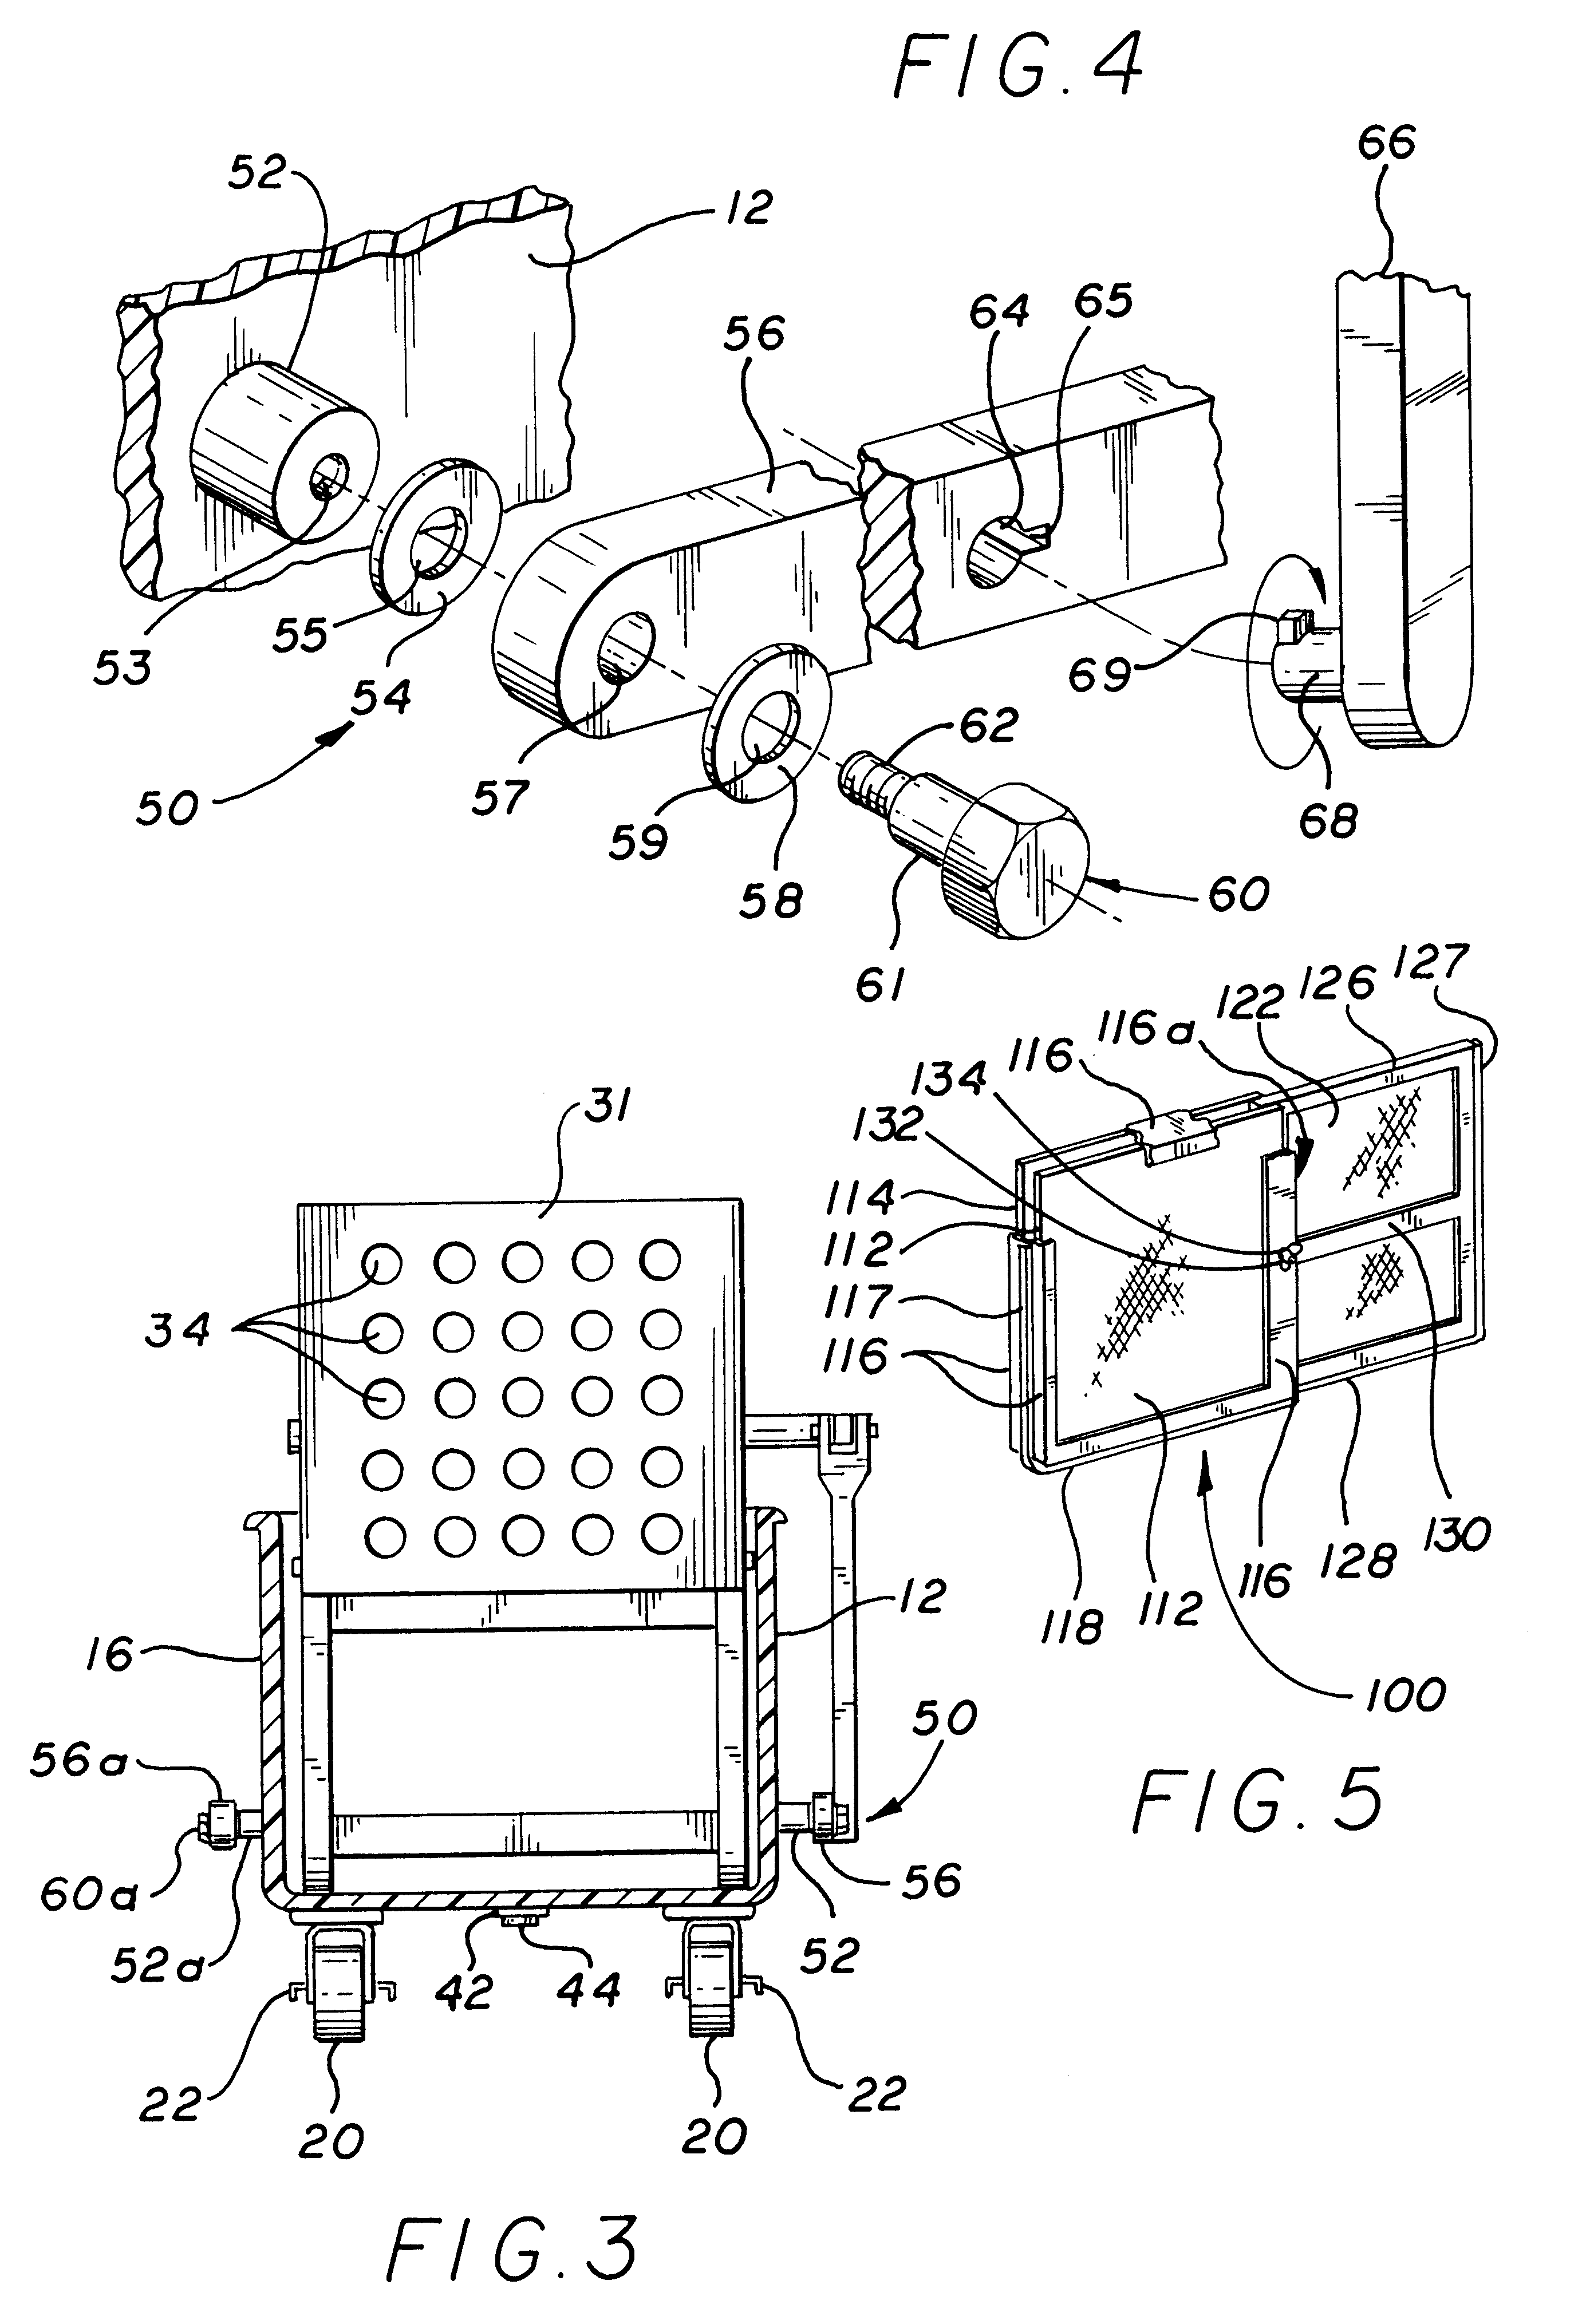 Ergonomic mop bucket method and apparatus